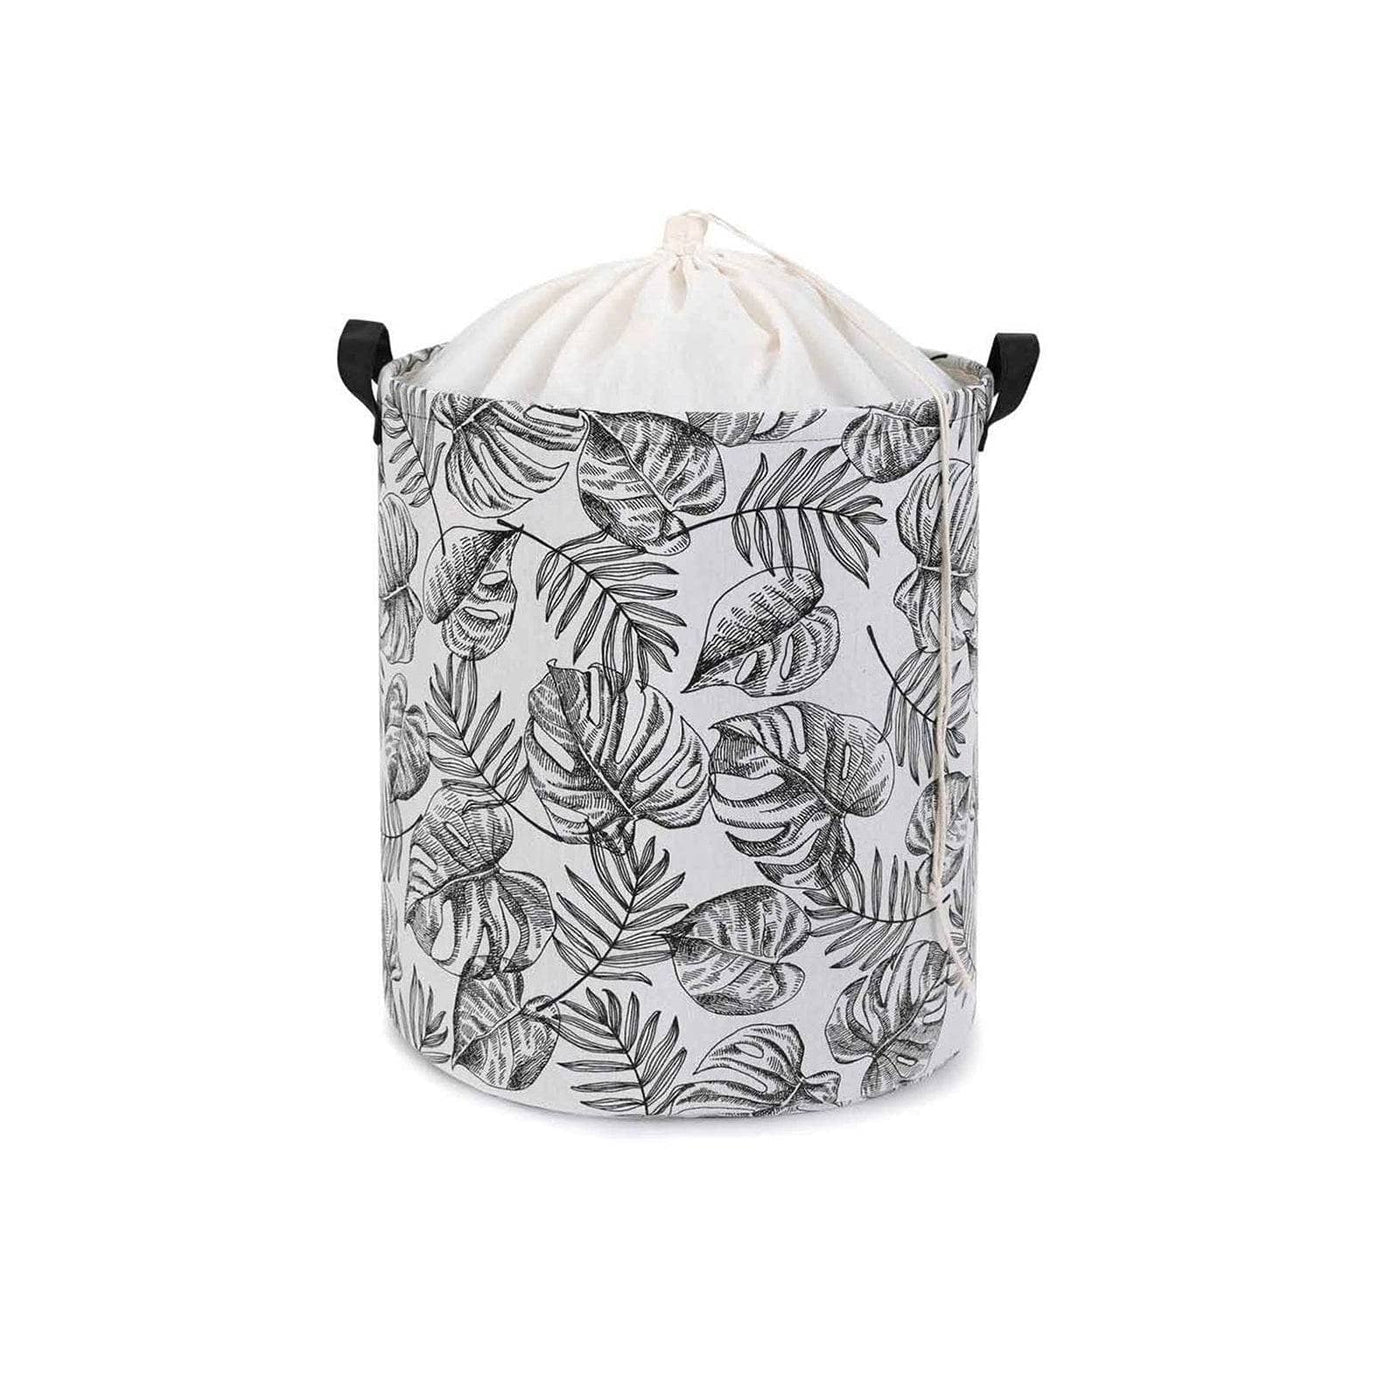 Tropical Patterned Laundry Basket, Black - White Baskets sazy.com